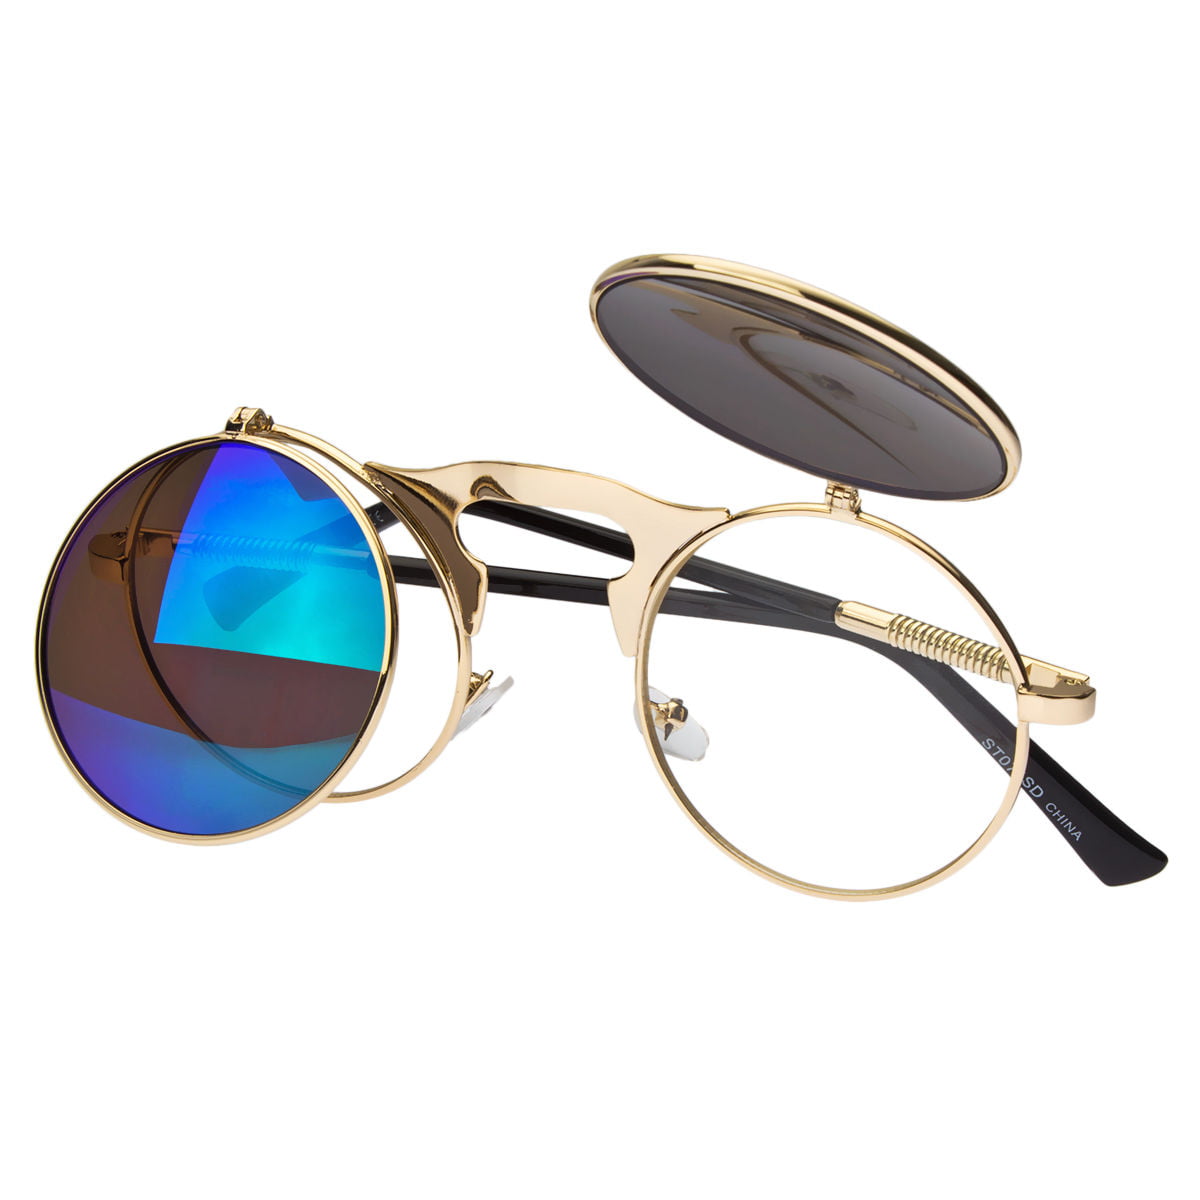 Cool Flip Up Lens Steampunk Vintage Retro Style Round Sunglasses Black Gold New 